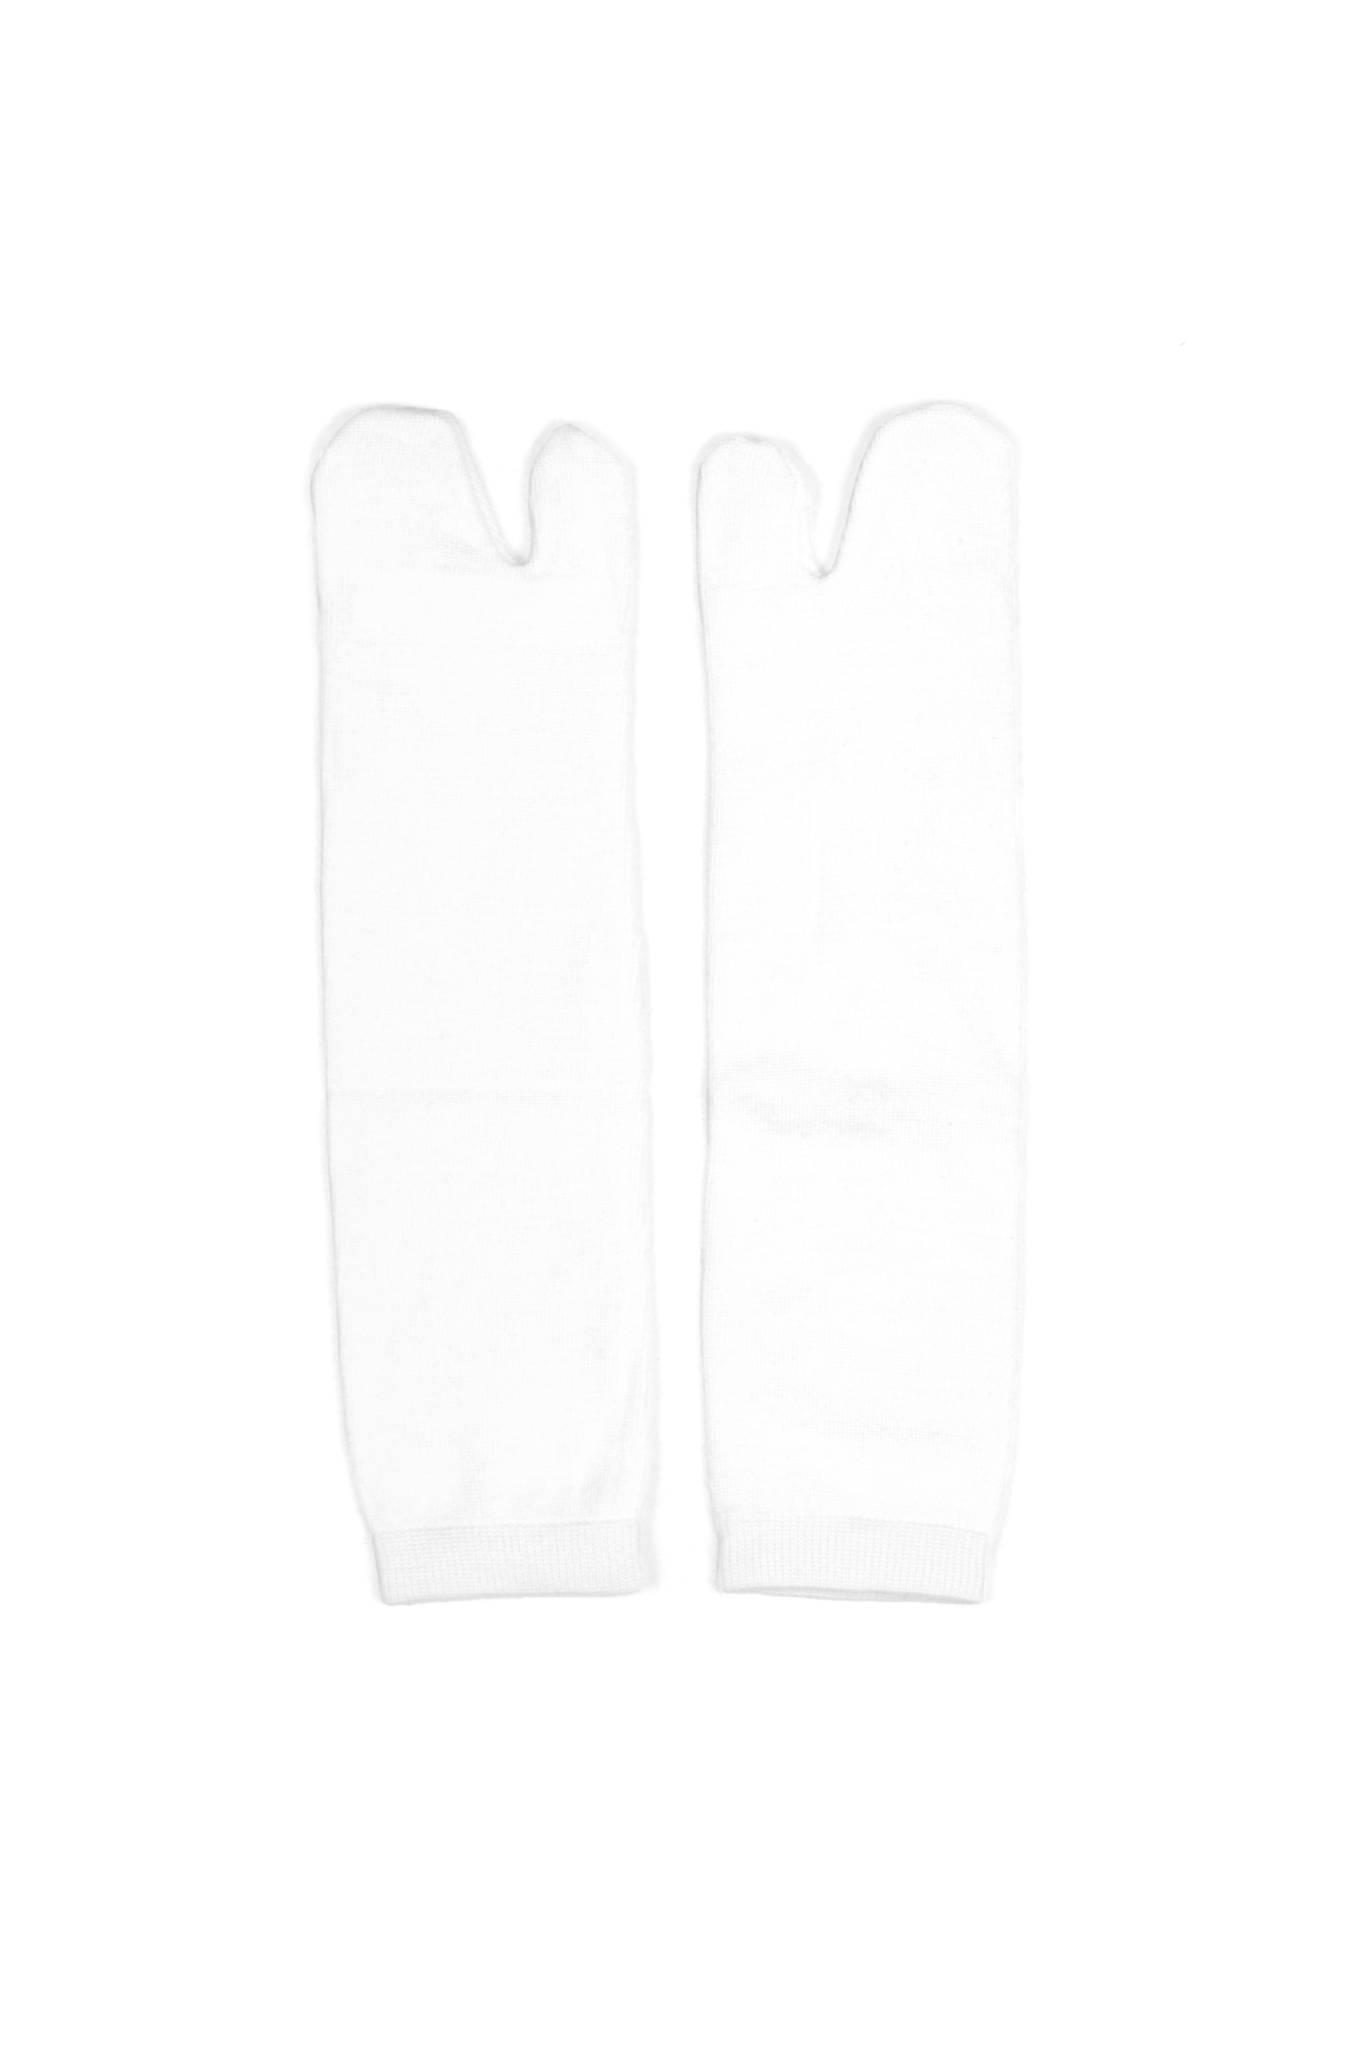 Off-Brand Tabi Socks, White